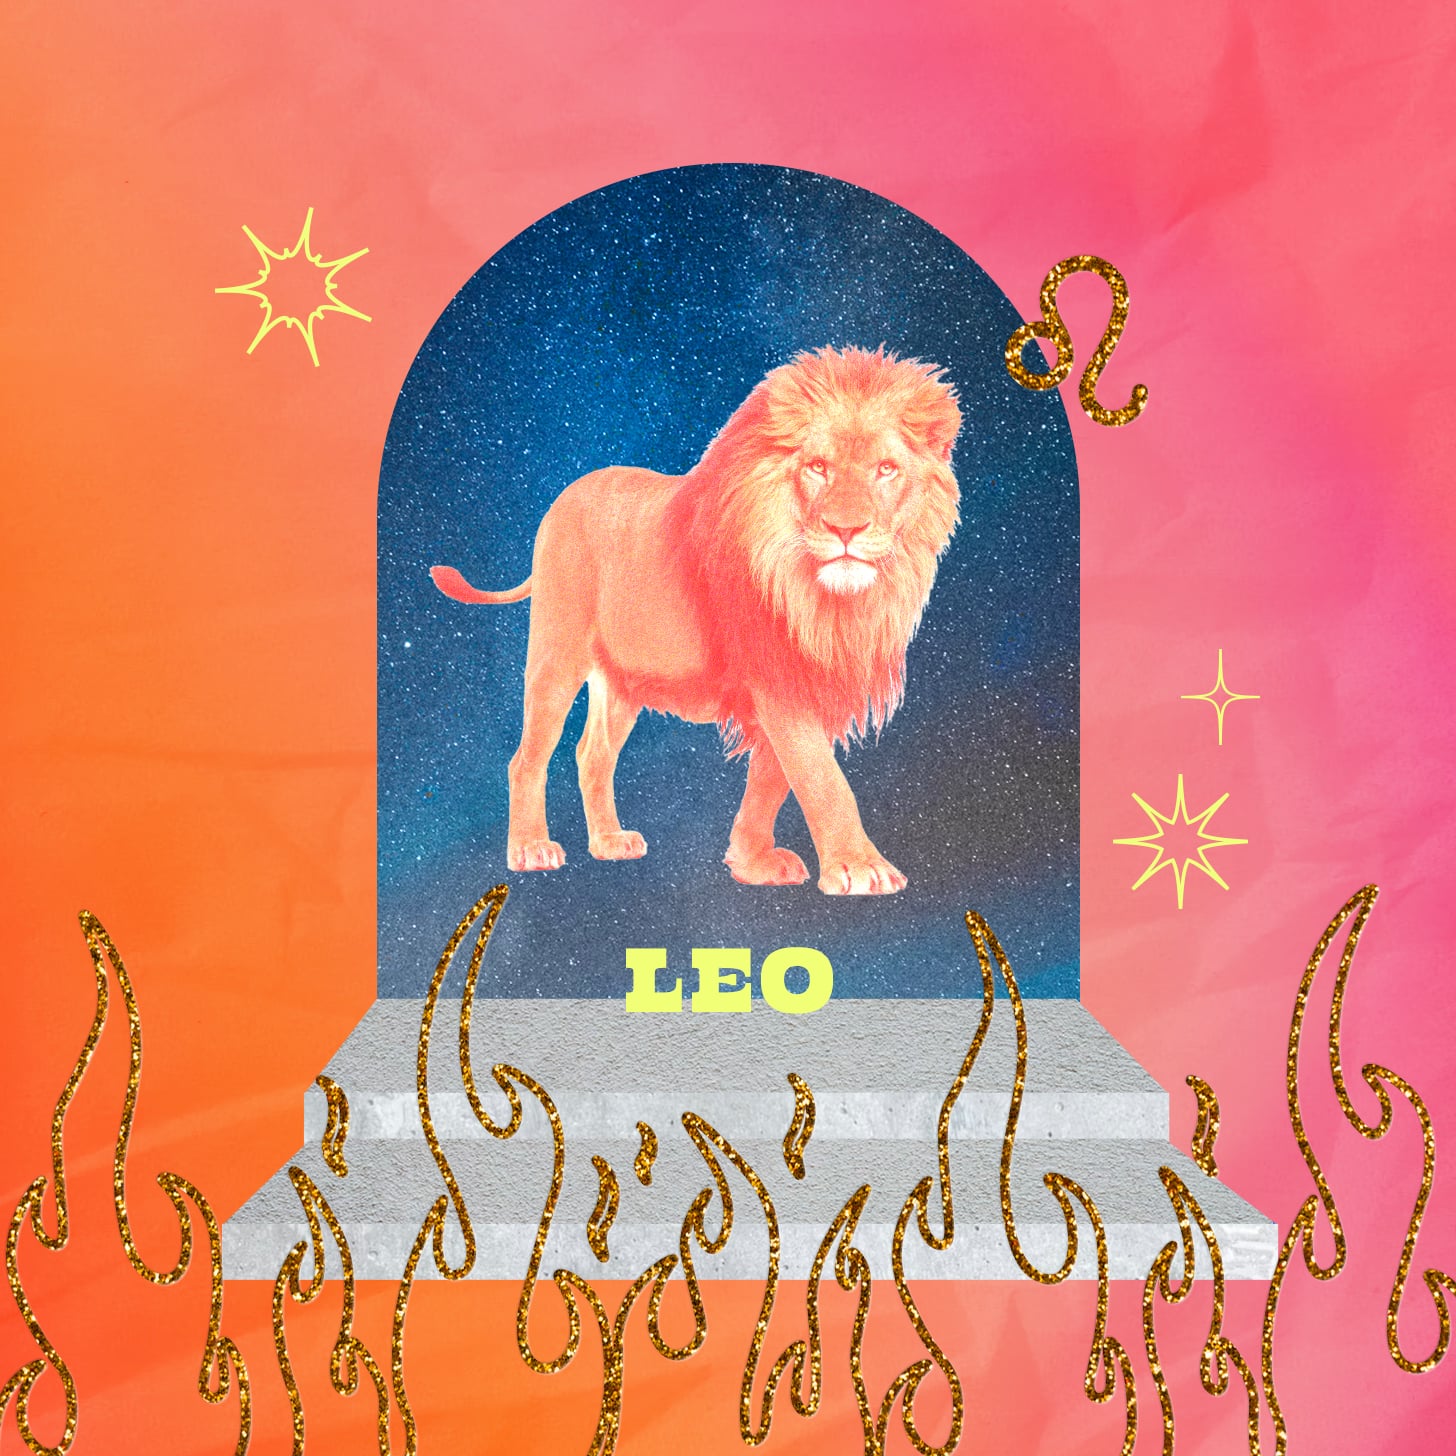 Leo weekly horoscope for June 19, 2022